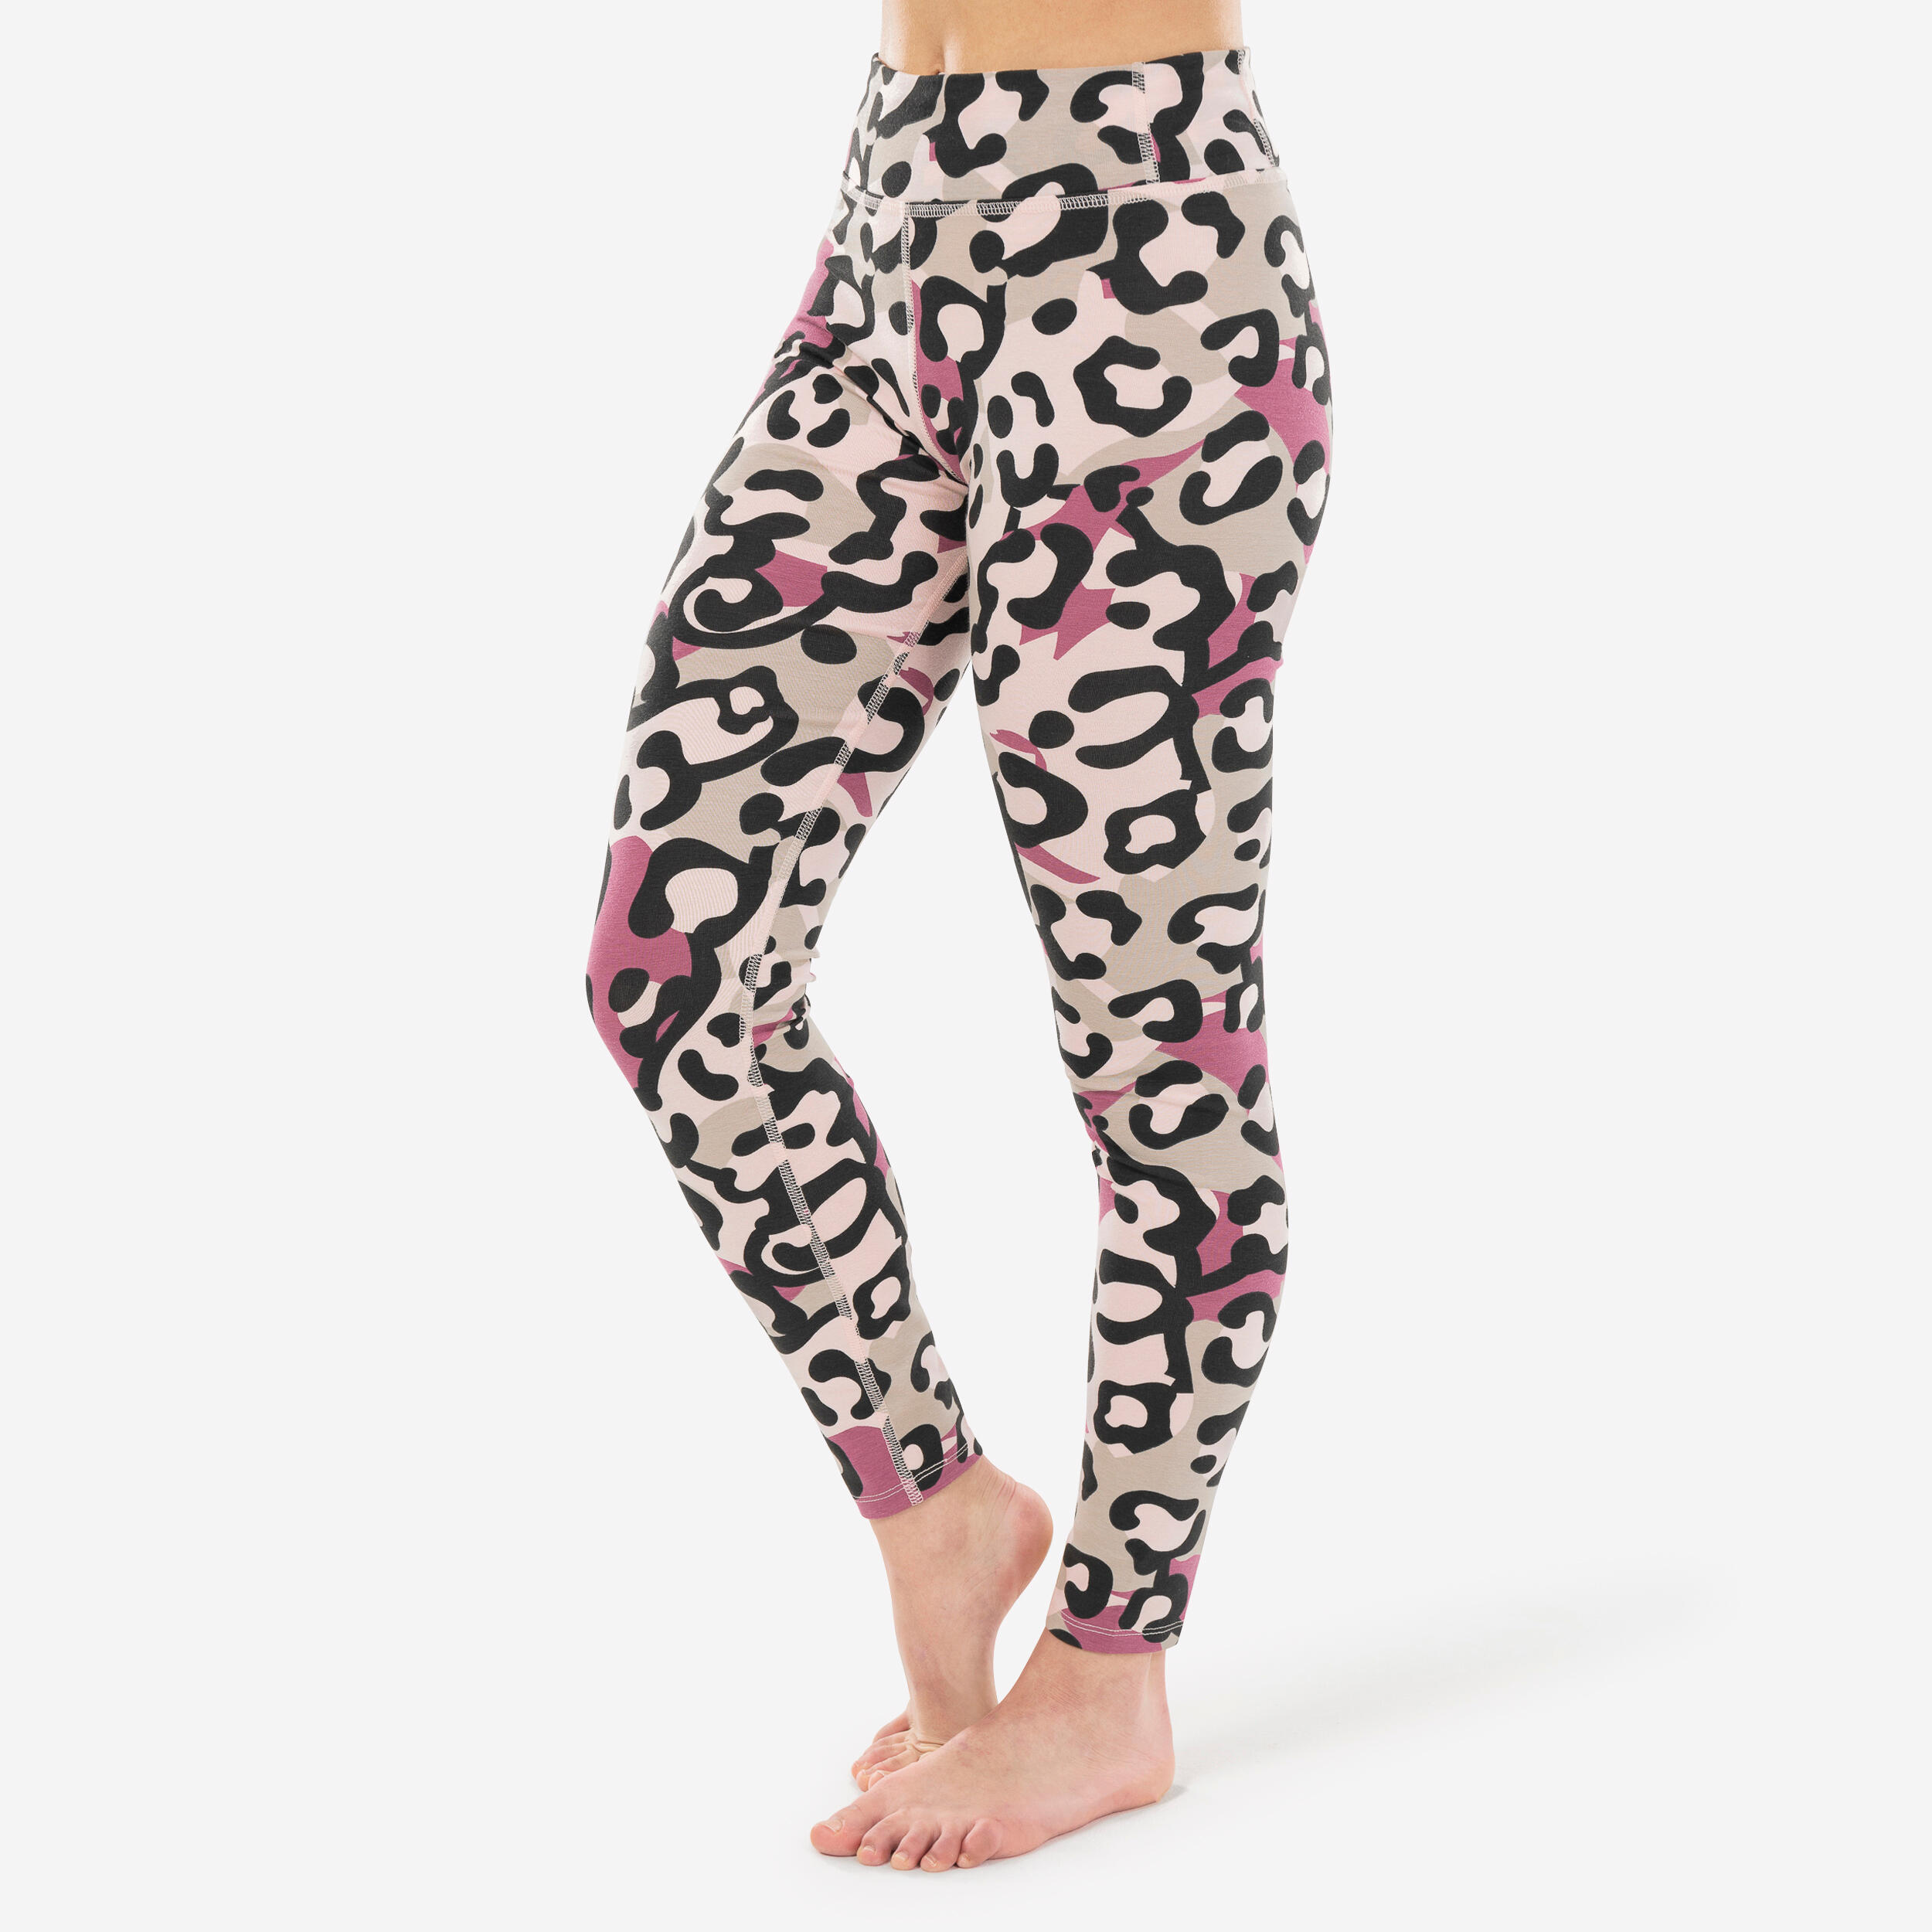 STAREVER Girls' High-Waisted Dance Leggings - Pink/Leopard Print